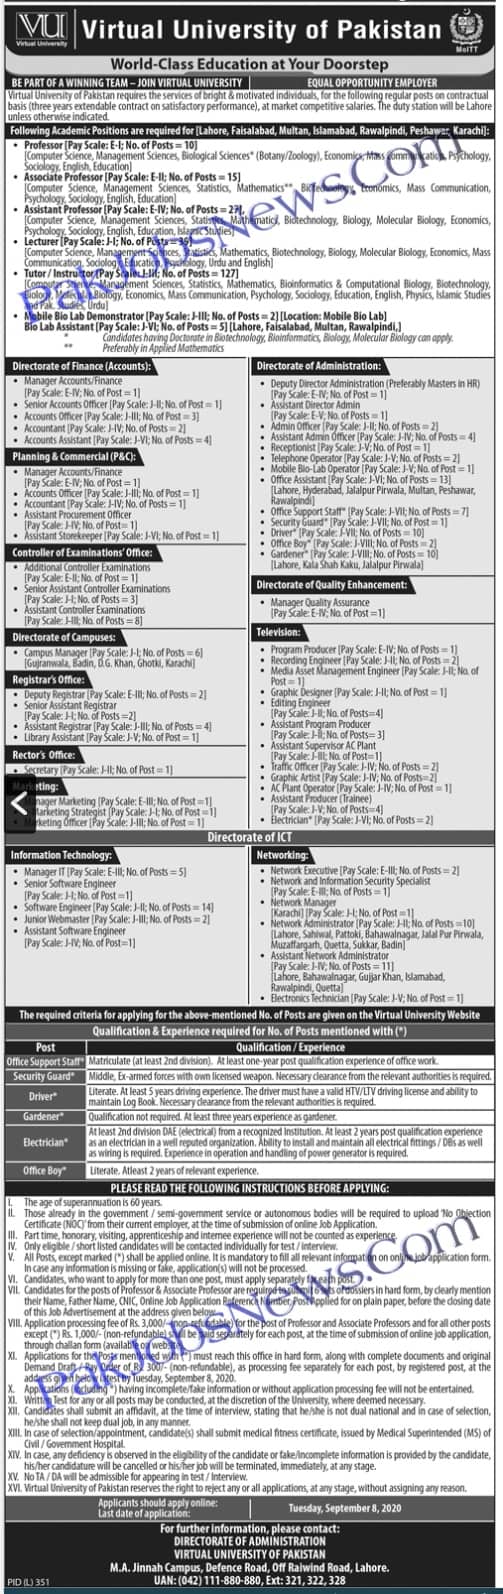 Virtual University of Pakistan Jobs 2020 for teaching staff